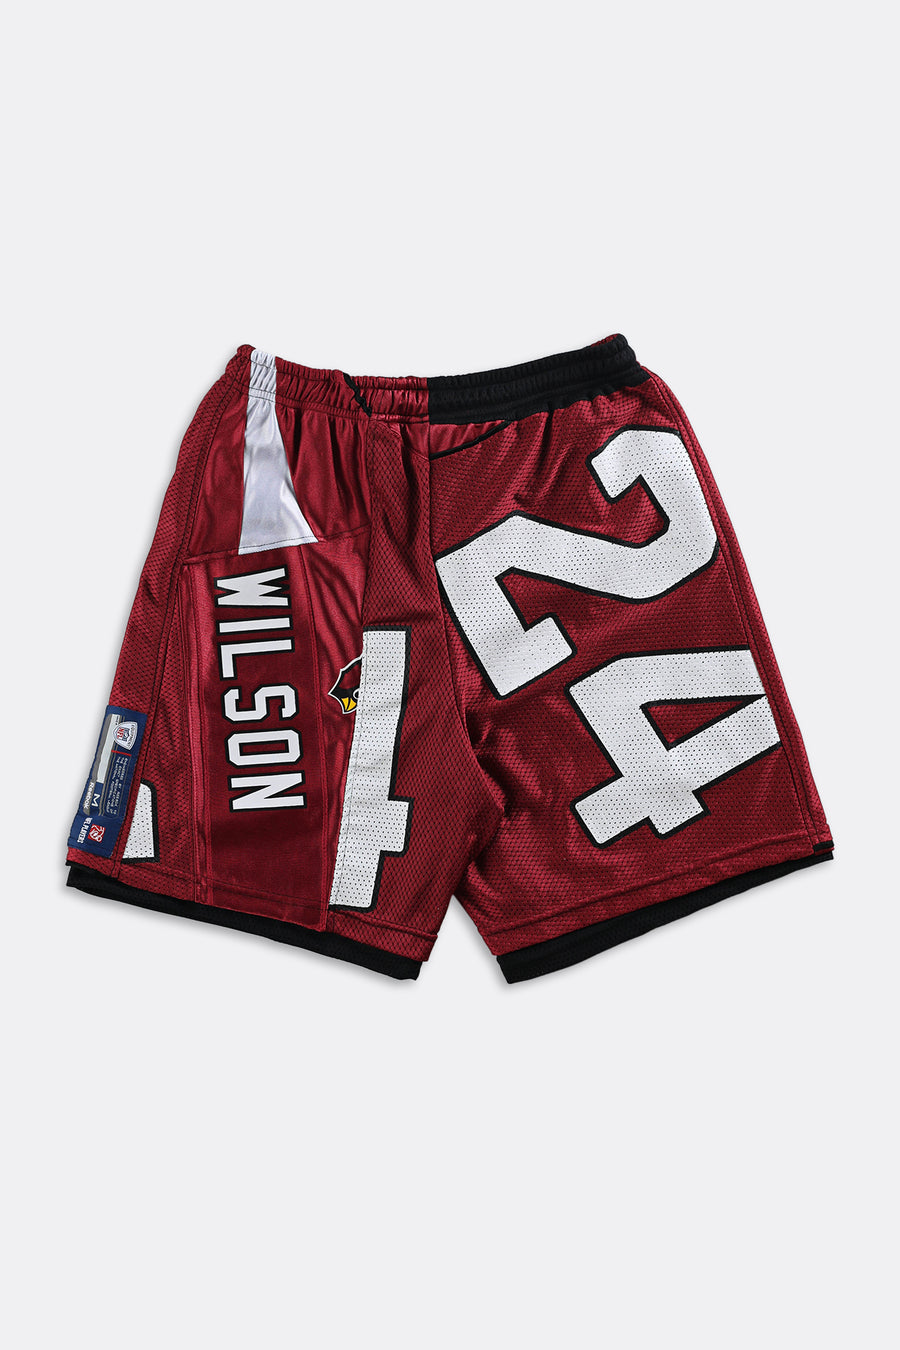 Rework Unisex Cardinals NFL Jersey Shorts - Women-L, Men-M